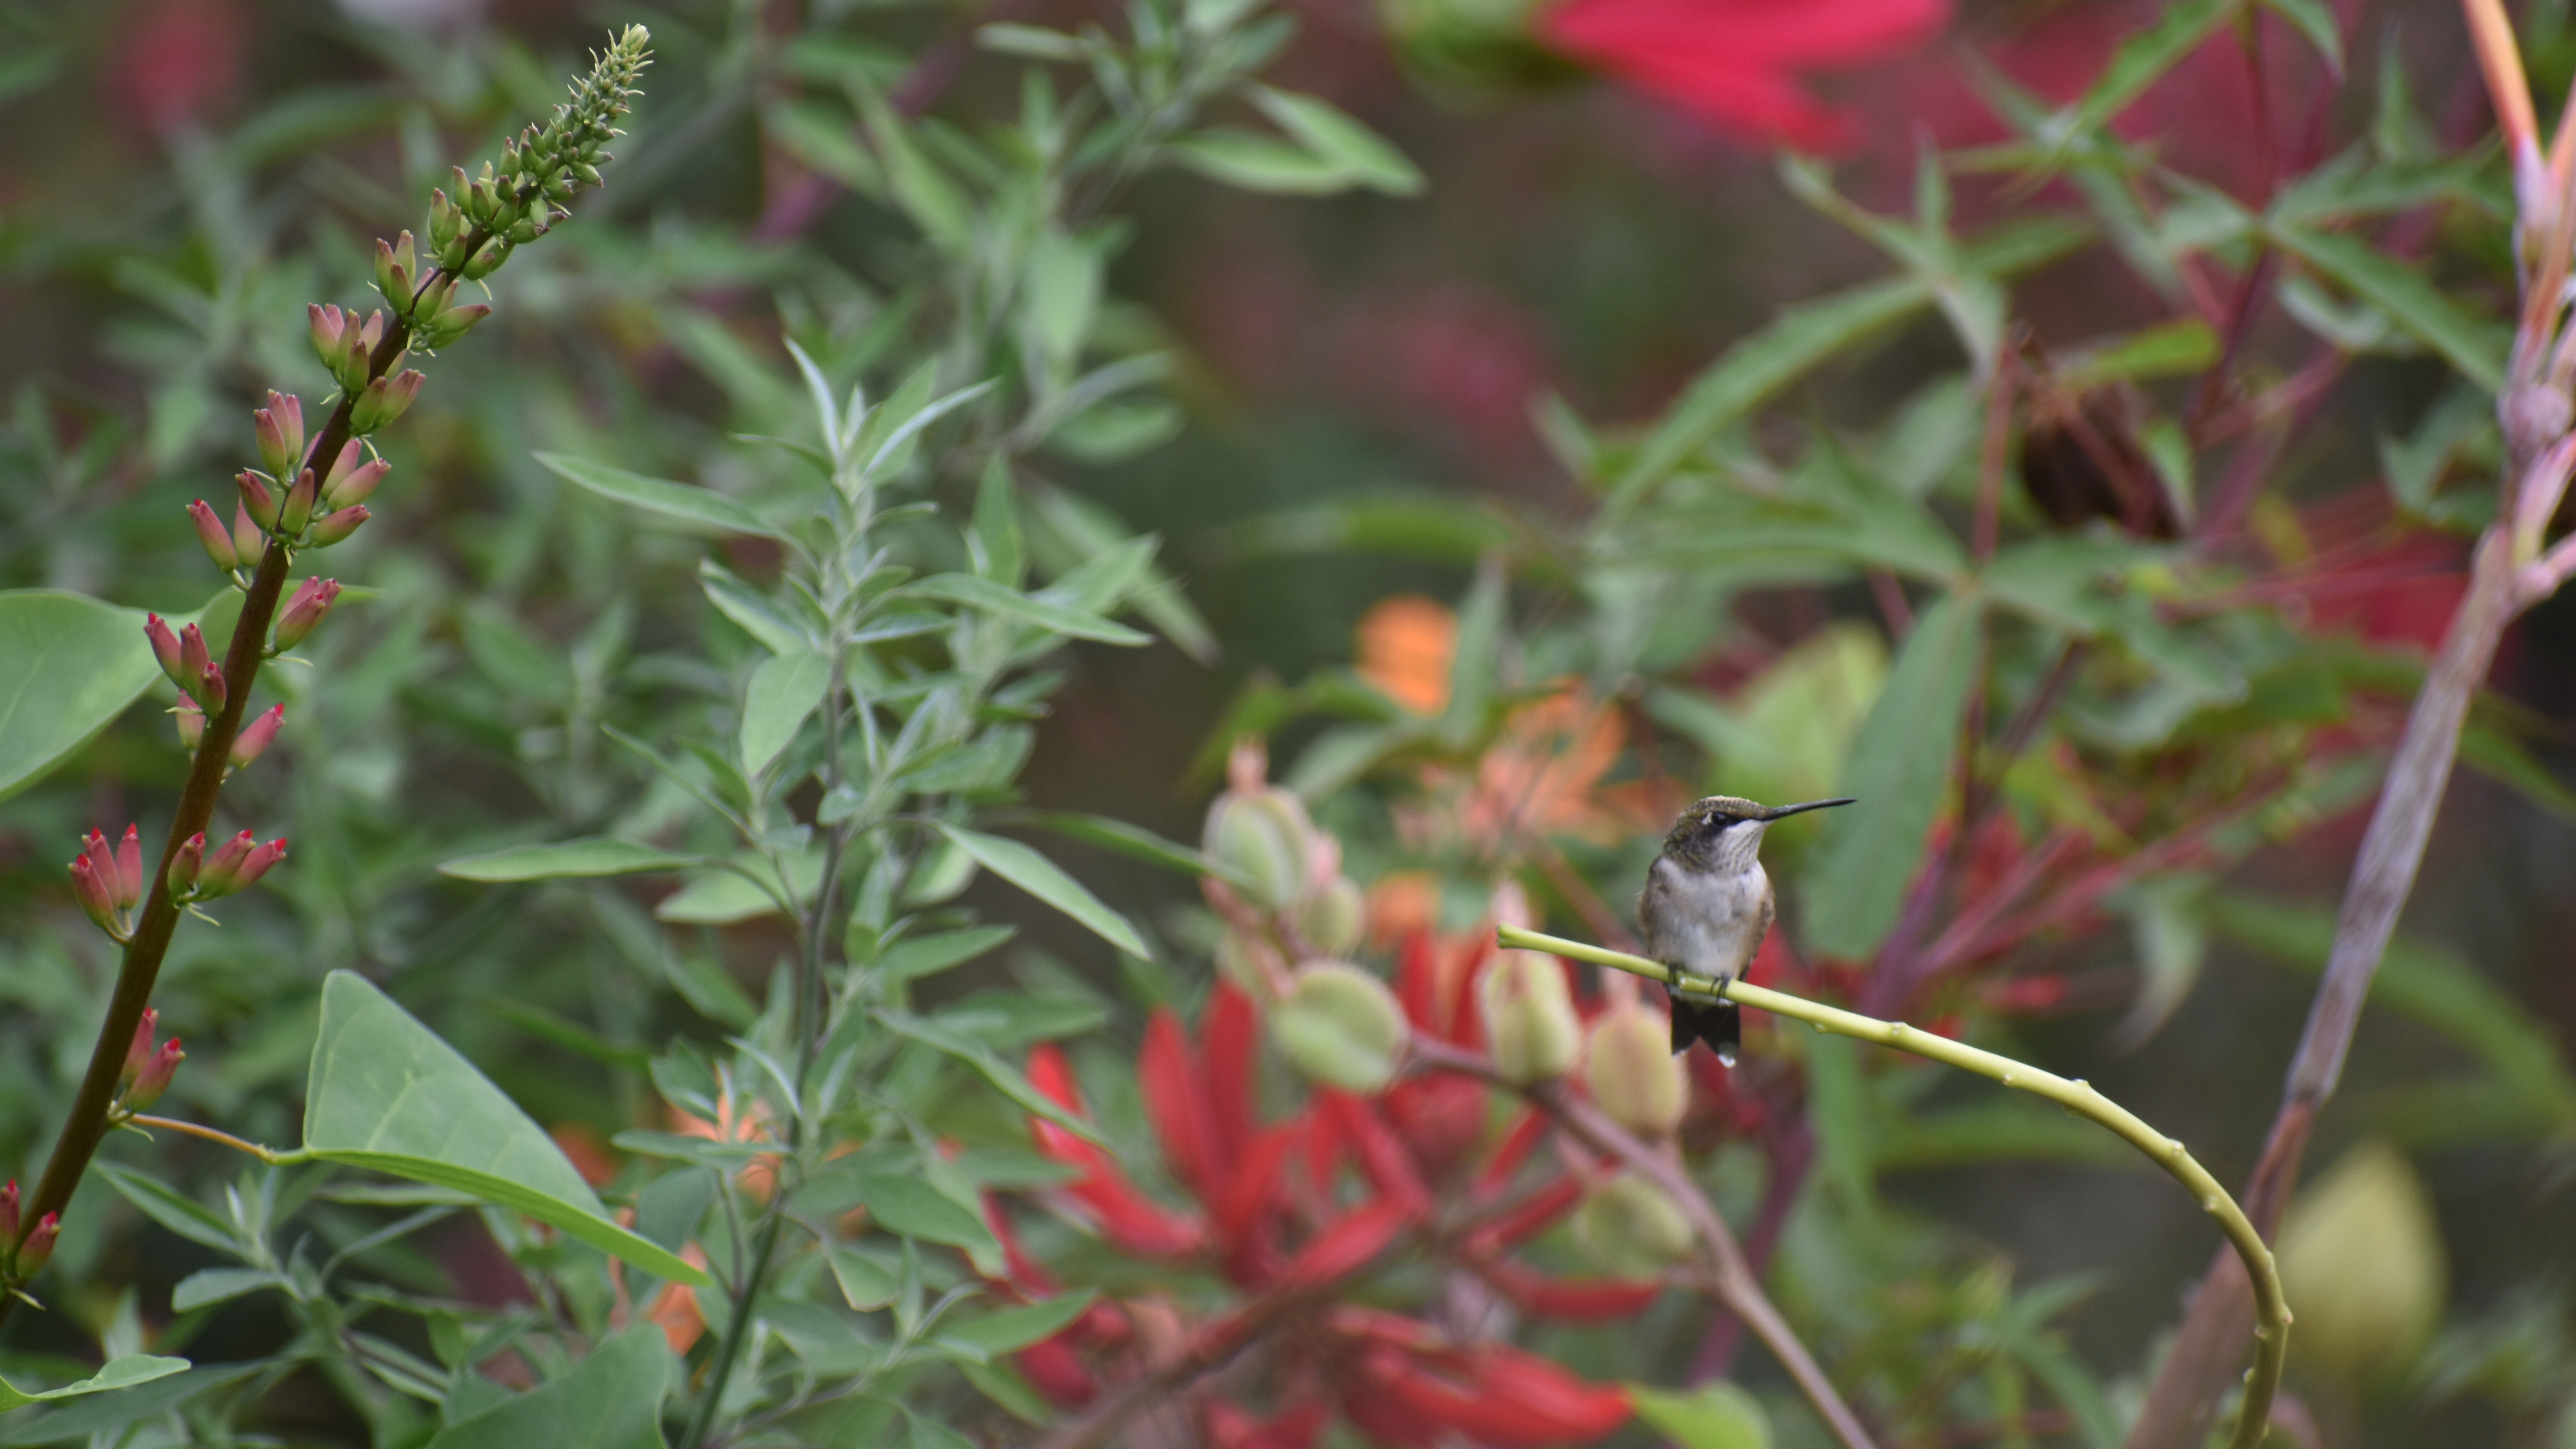 A roosting hummingbird